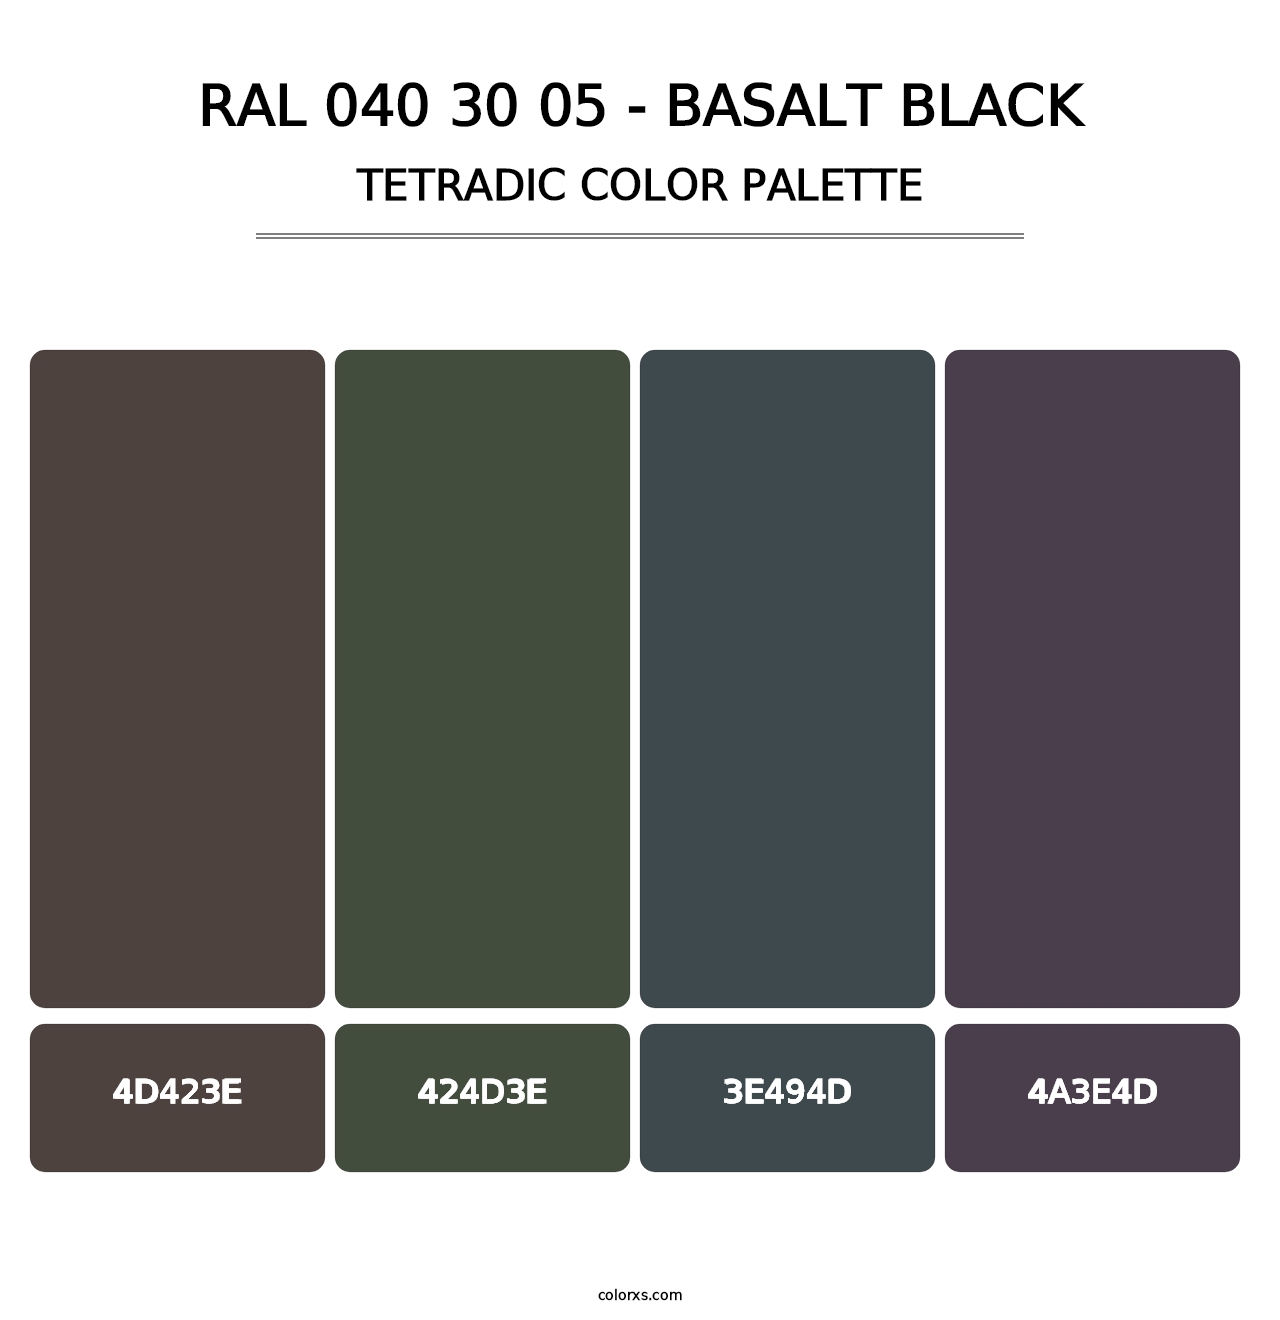 RAL 040 30 05 - Basalt Black - Tetradic Color Palette